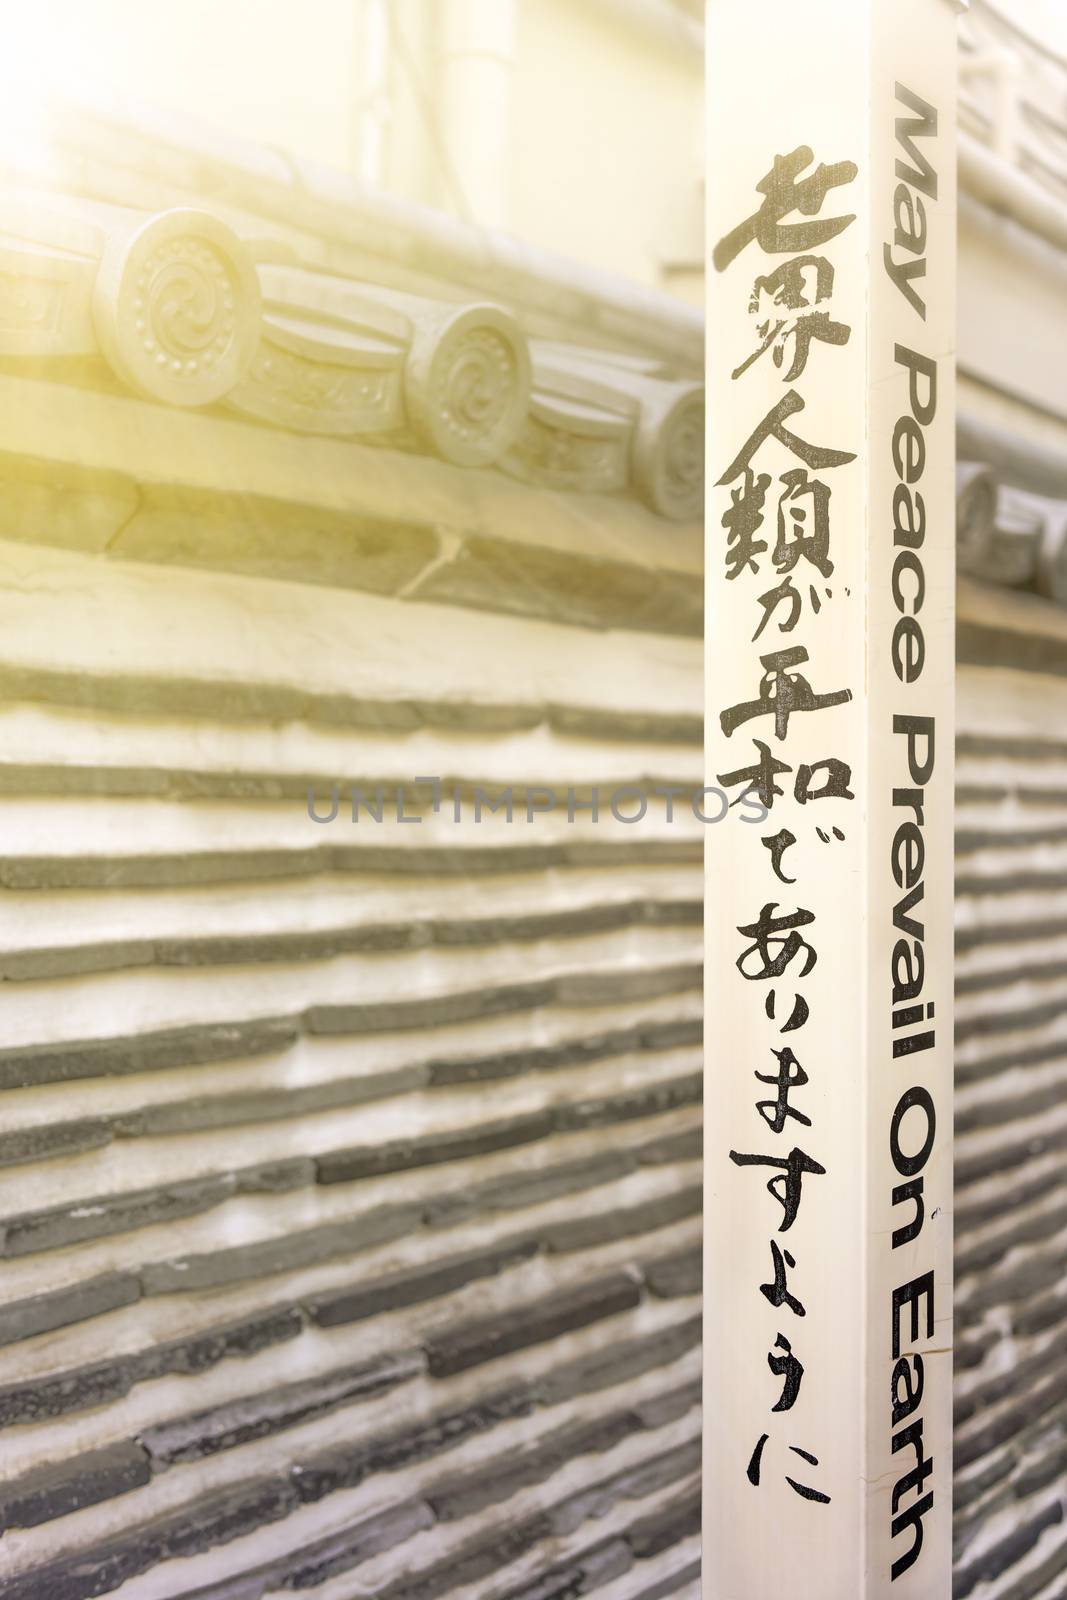 Famous sentence 'May Peace Prevail On Earth' by Byakko Shinkokai by kuremo